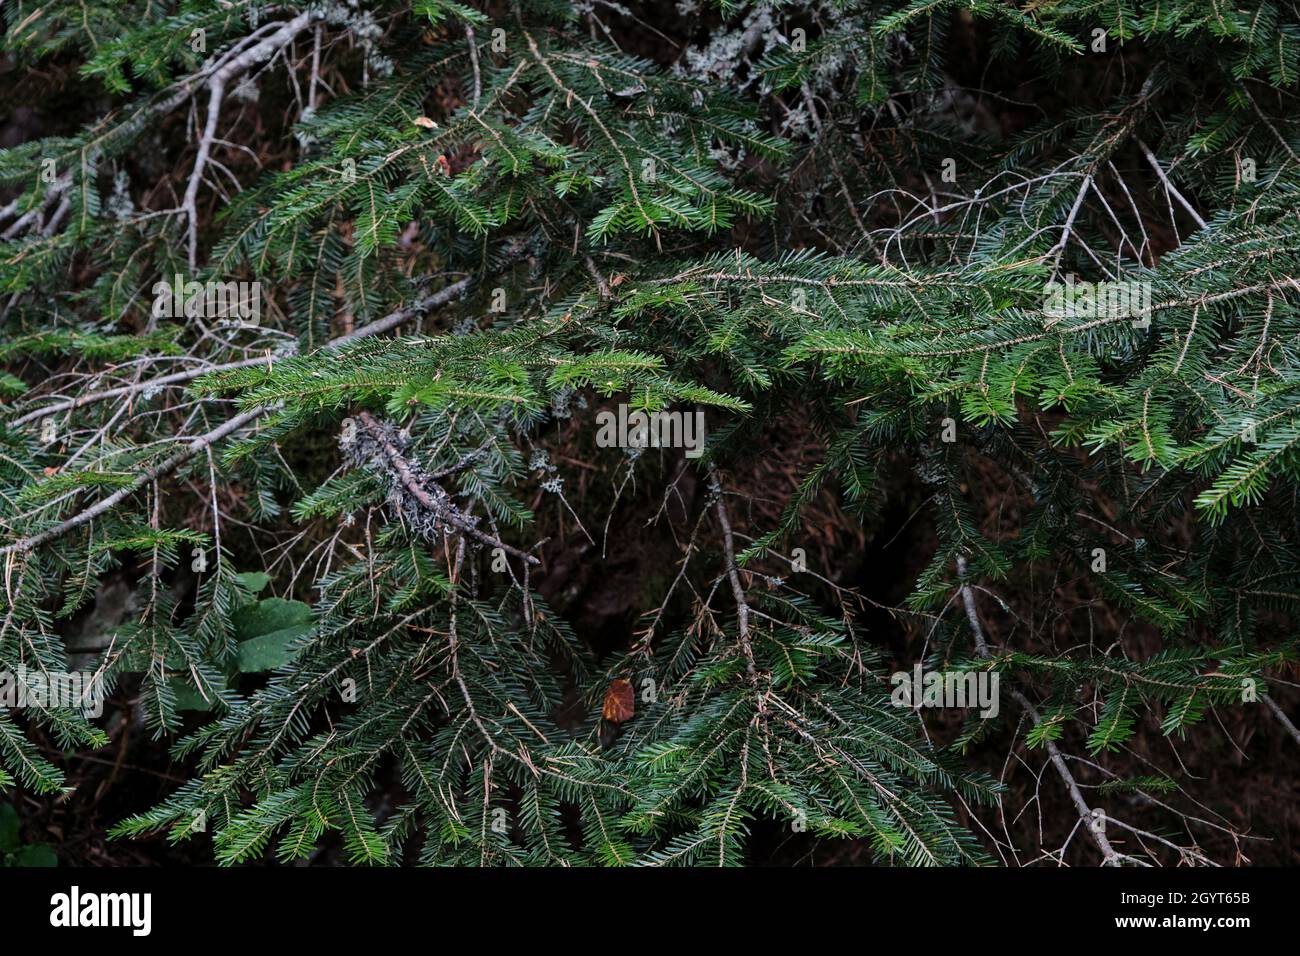 Abies alba or European silver fir evergreen coniferous tree green needle-like foliage Stock Photo